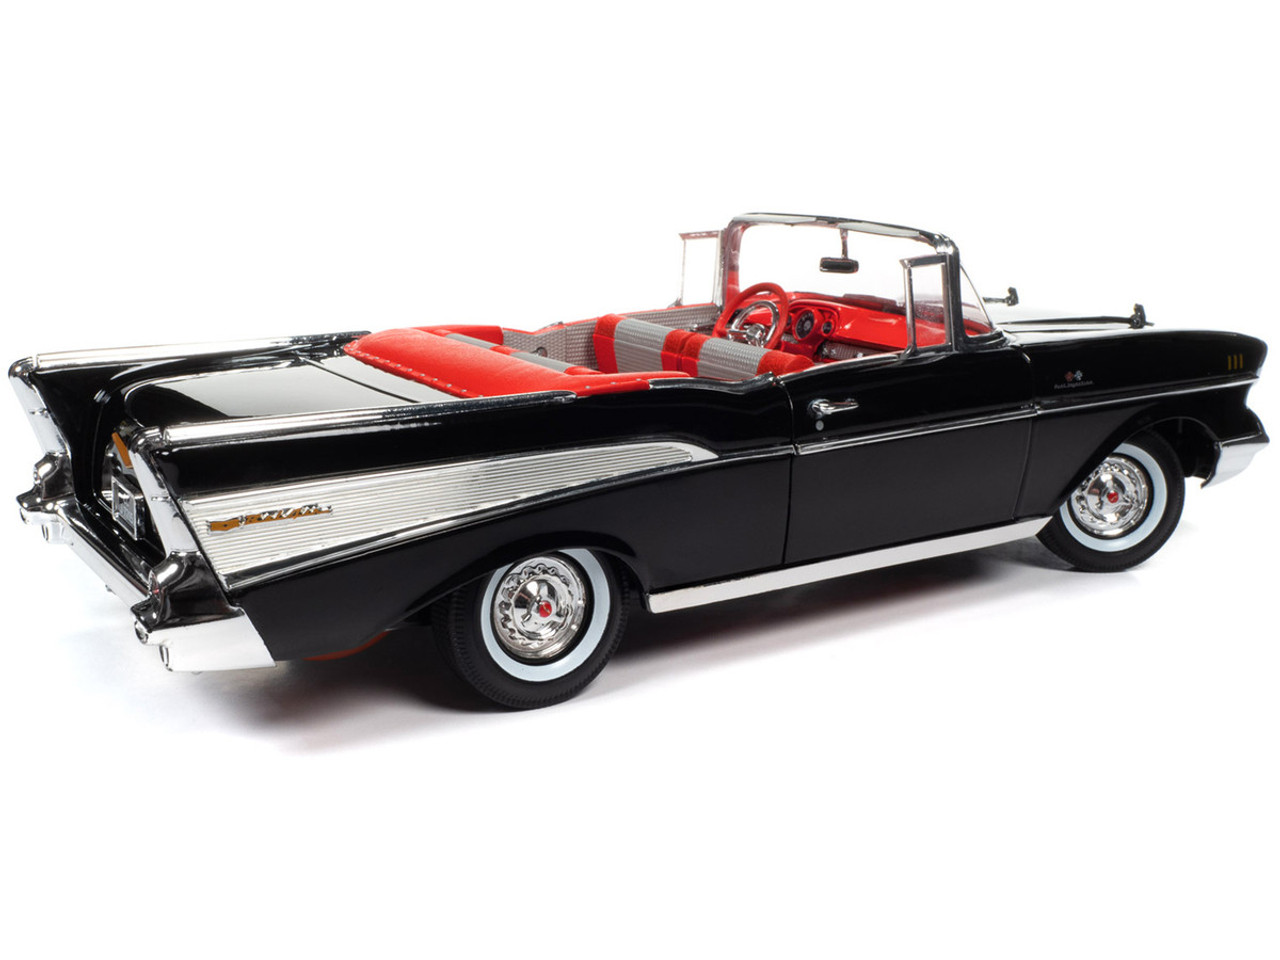 1/18 Auto World 1957 Chevrolet Bel Air Convertible Onyx Black James Bond 007 "Dr. No" (1962) Movie "60 Years of Bond" Series Diecast Car Model